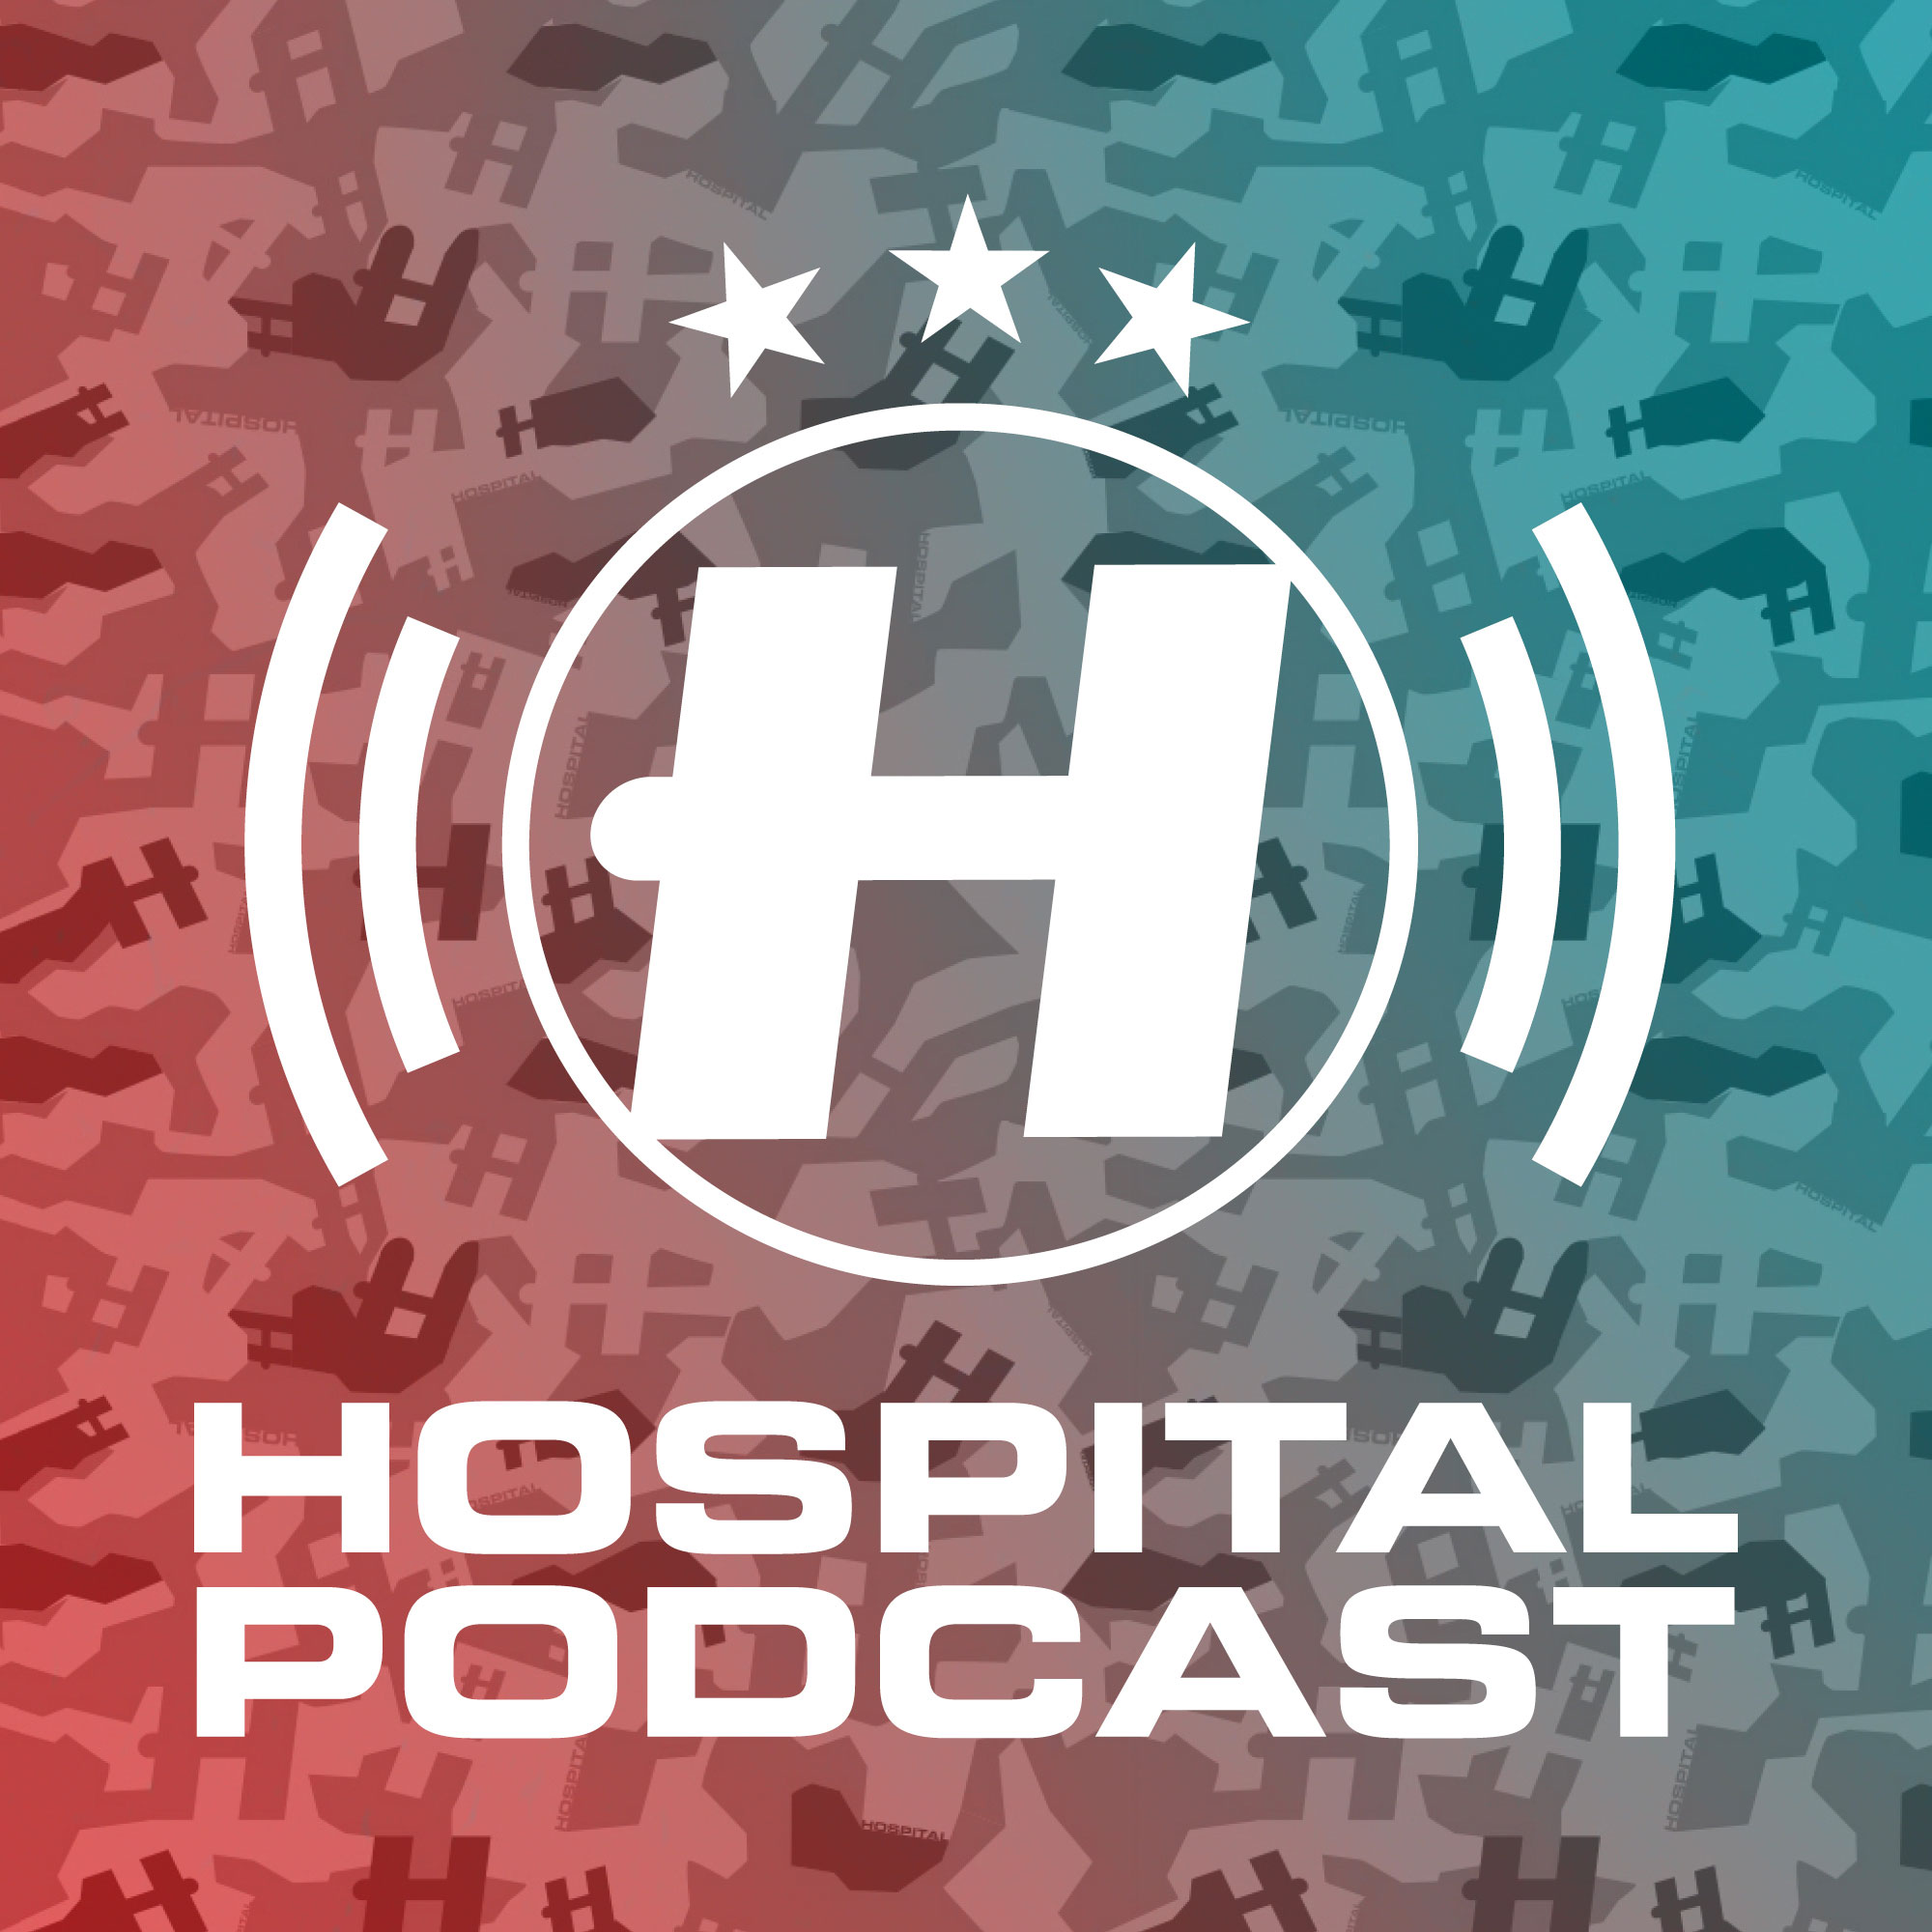 Hospital Podcast 382 with London Elektricity Artwork